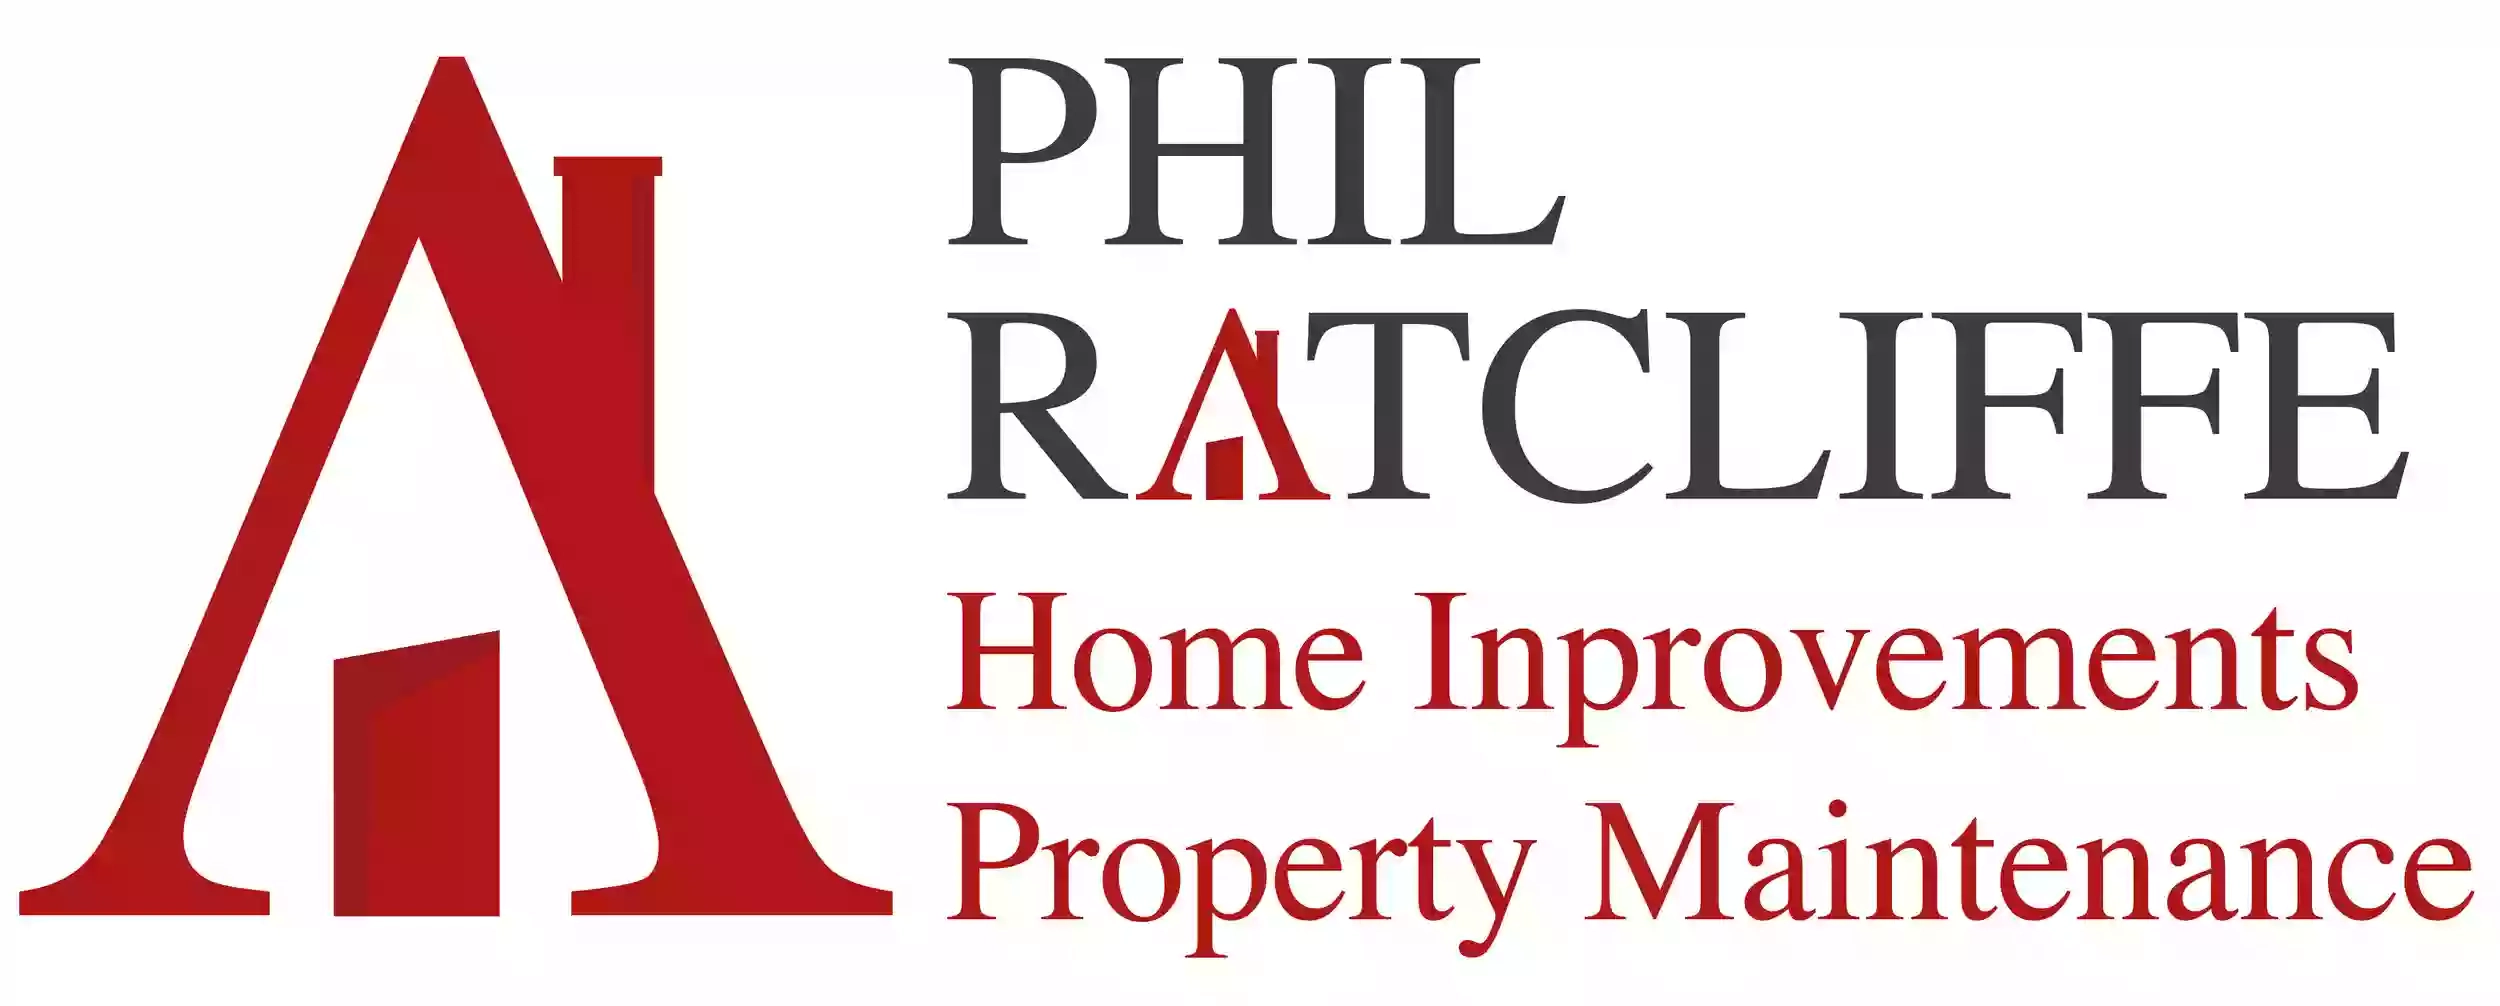 Phil Ratcliffe Home Improvements